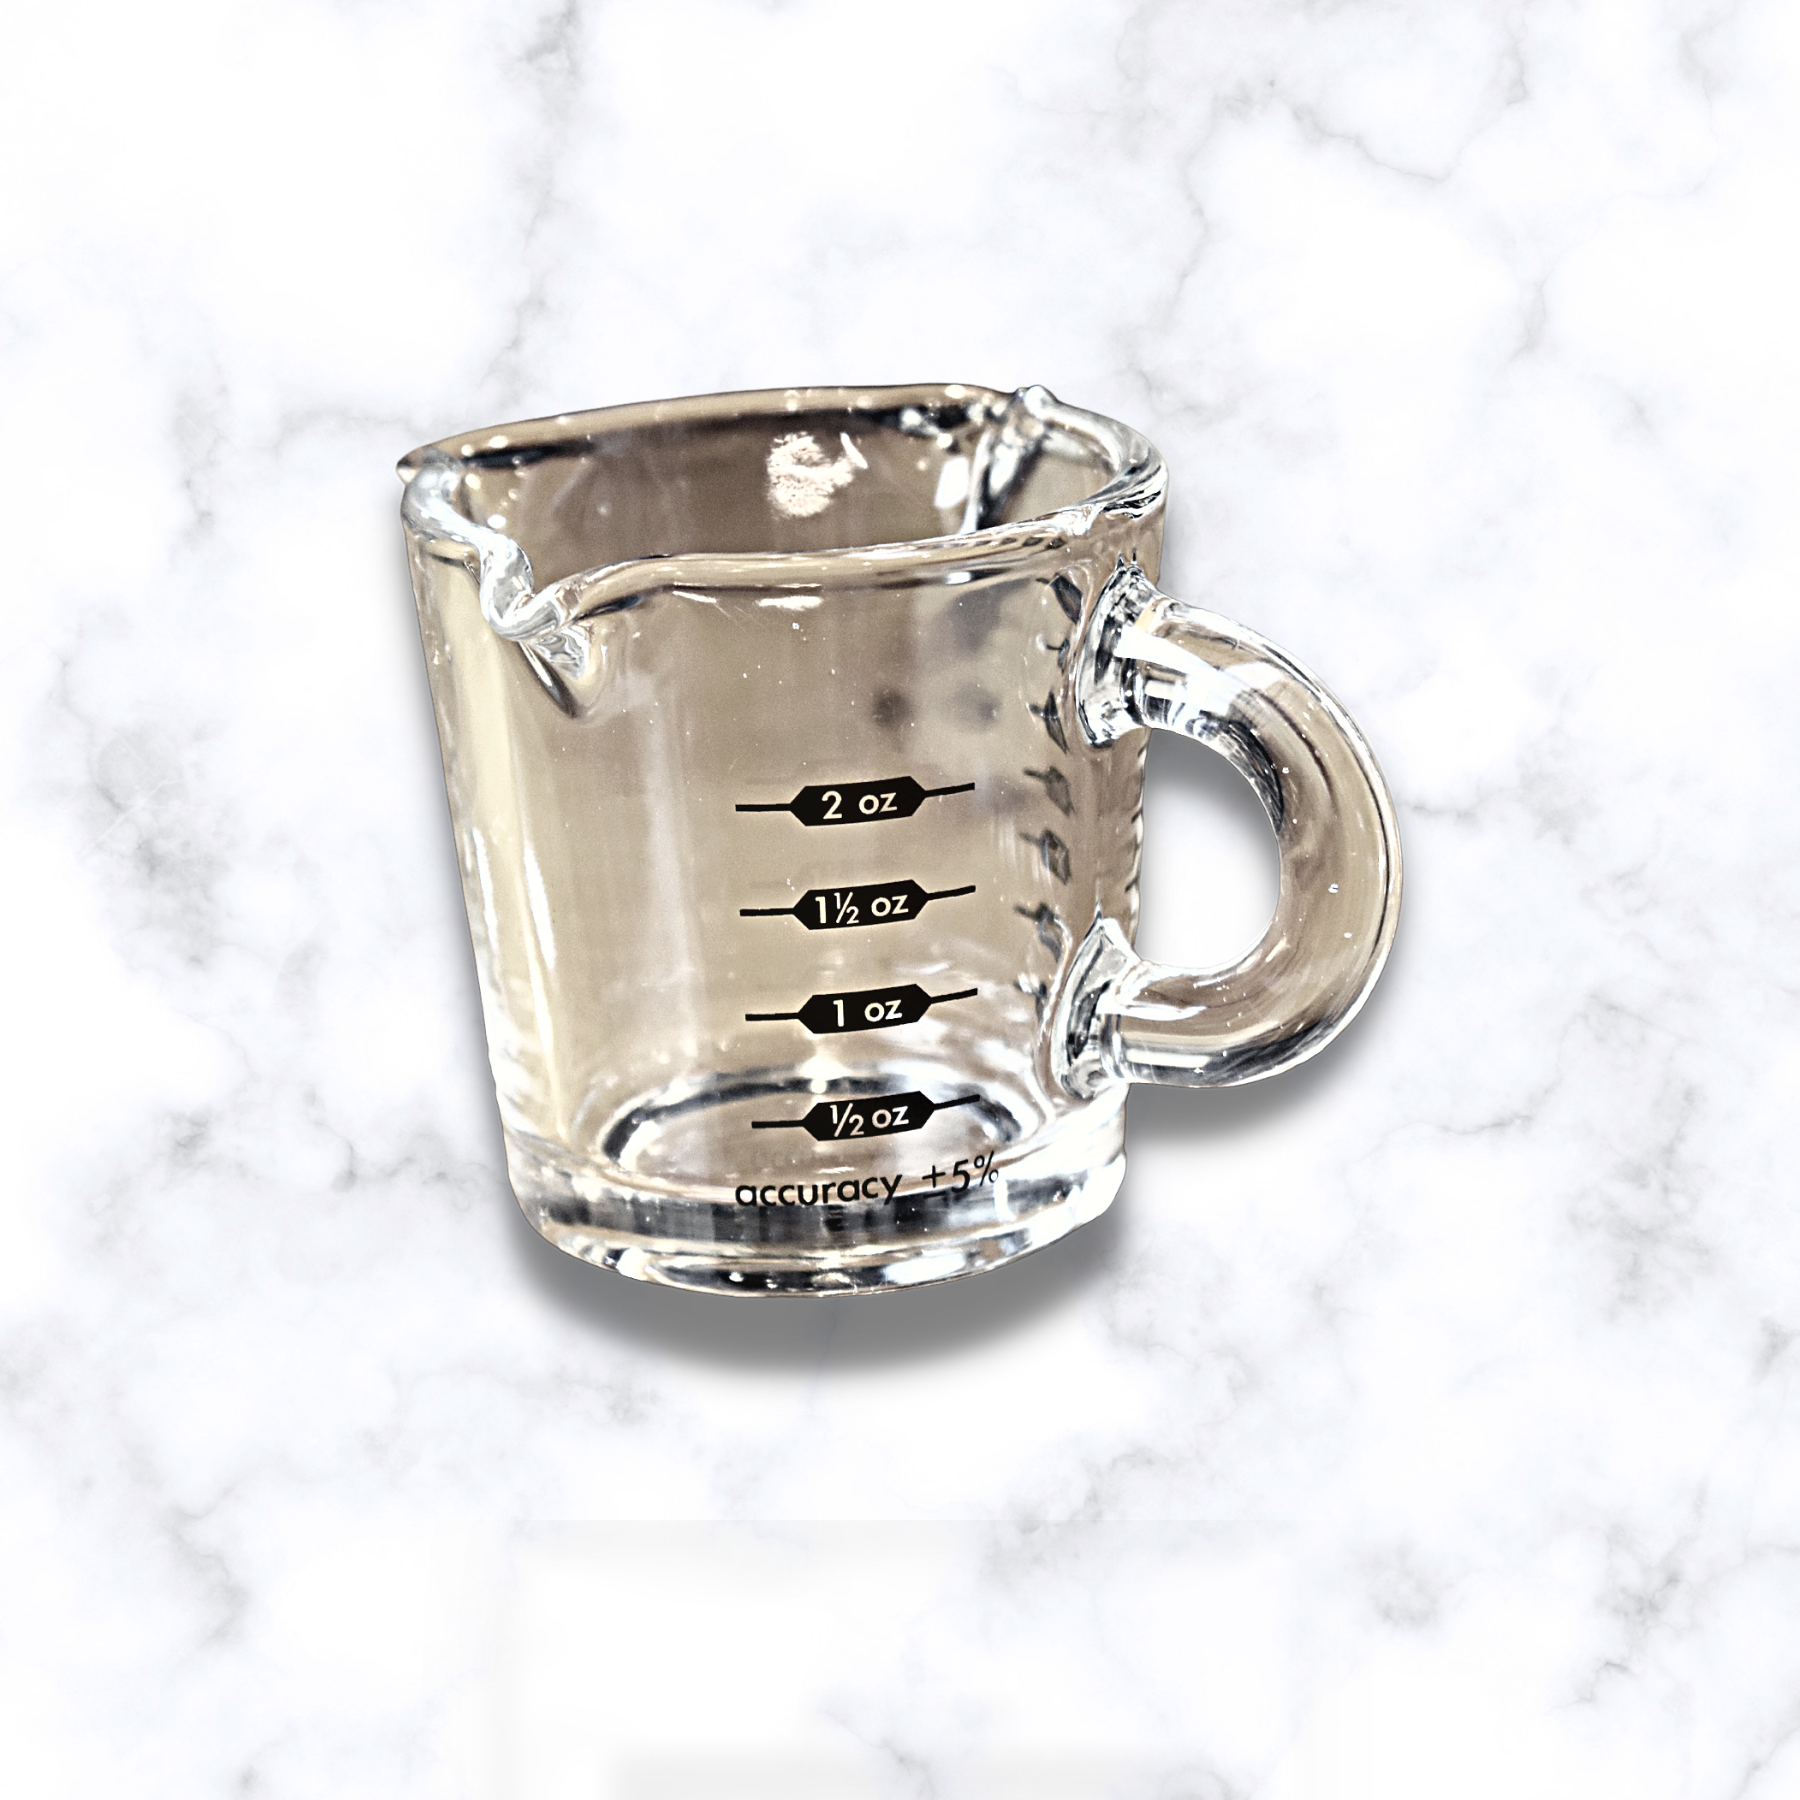 4 Oz Shot Glass – Coffee King Roasting & Supply Co.